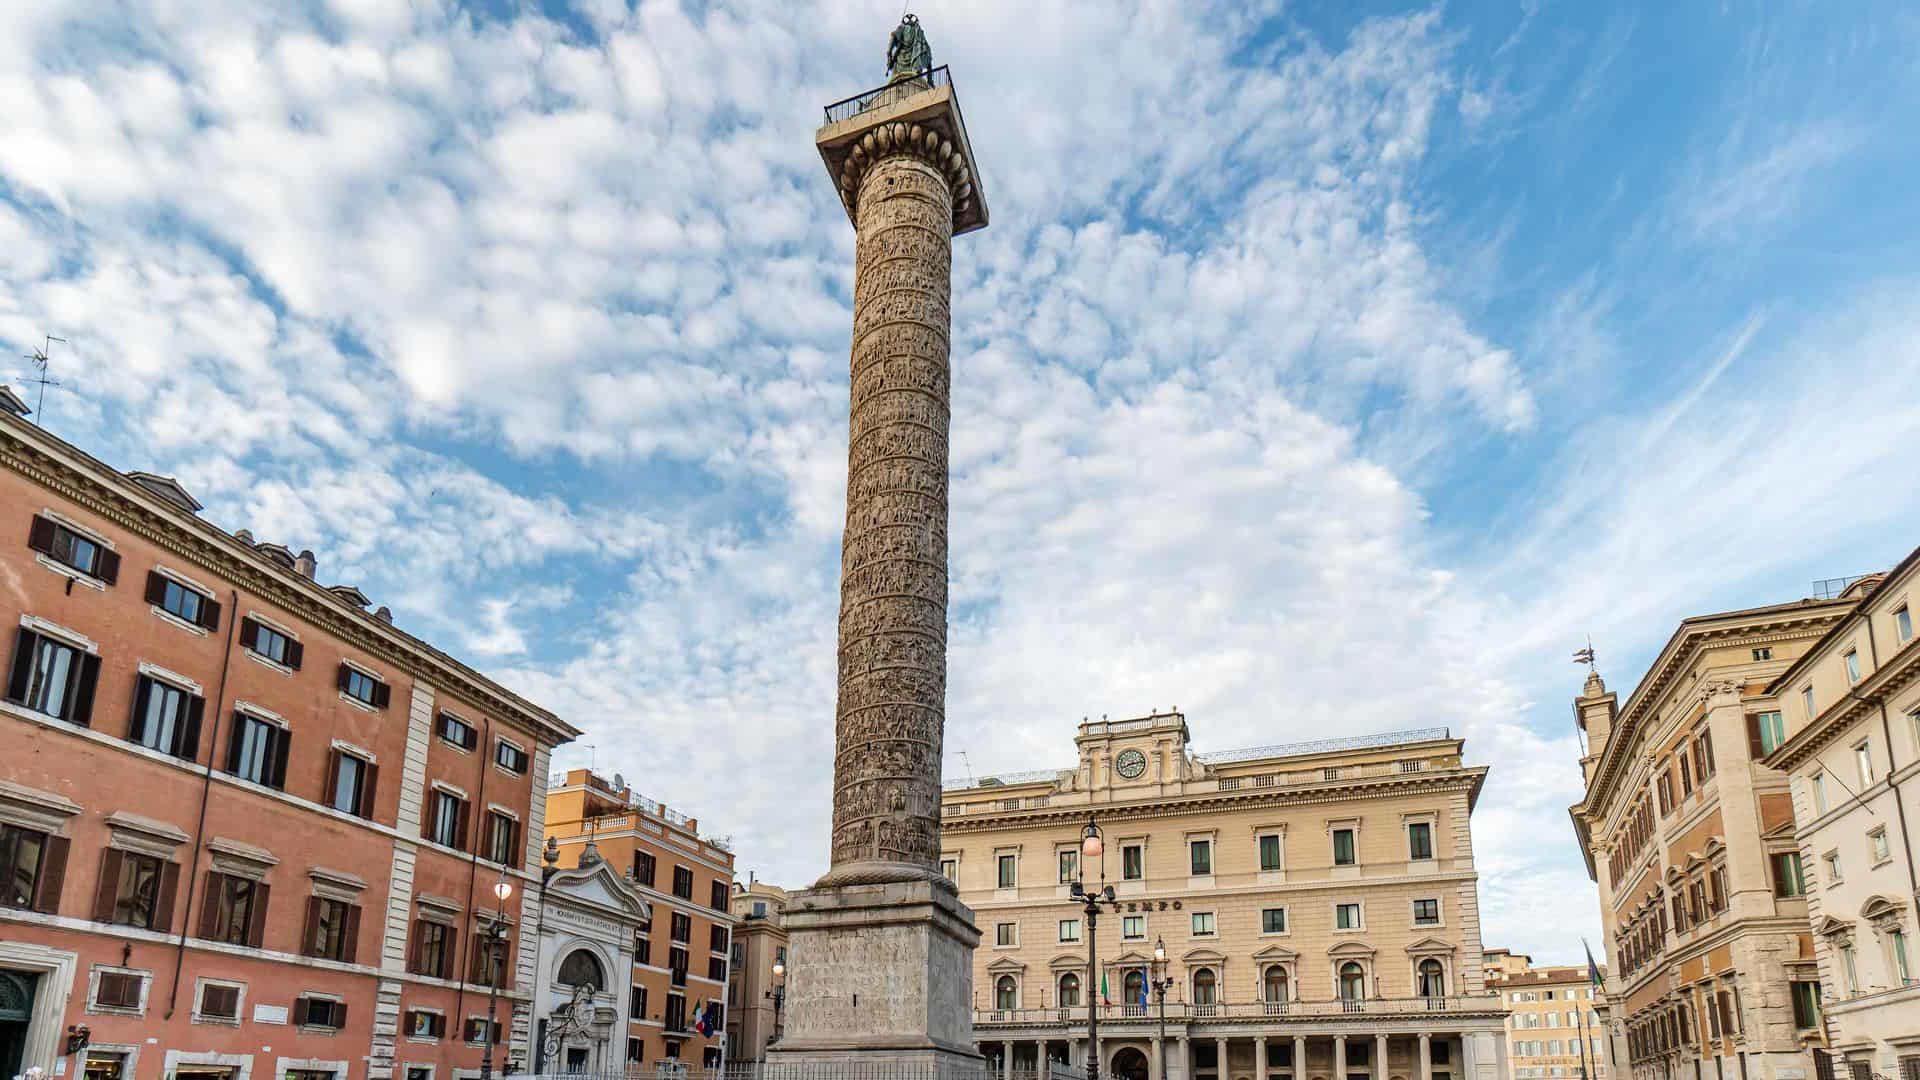 Marble Column of Marcus Aurelius in Piazza Colonna square in Rome, Italy